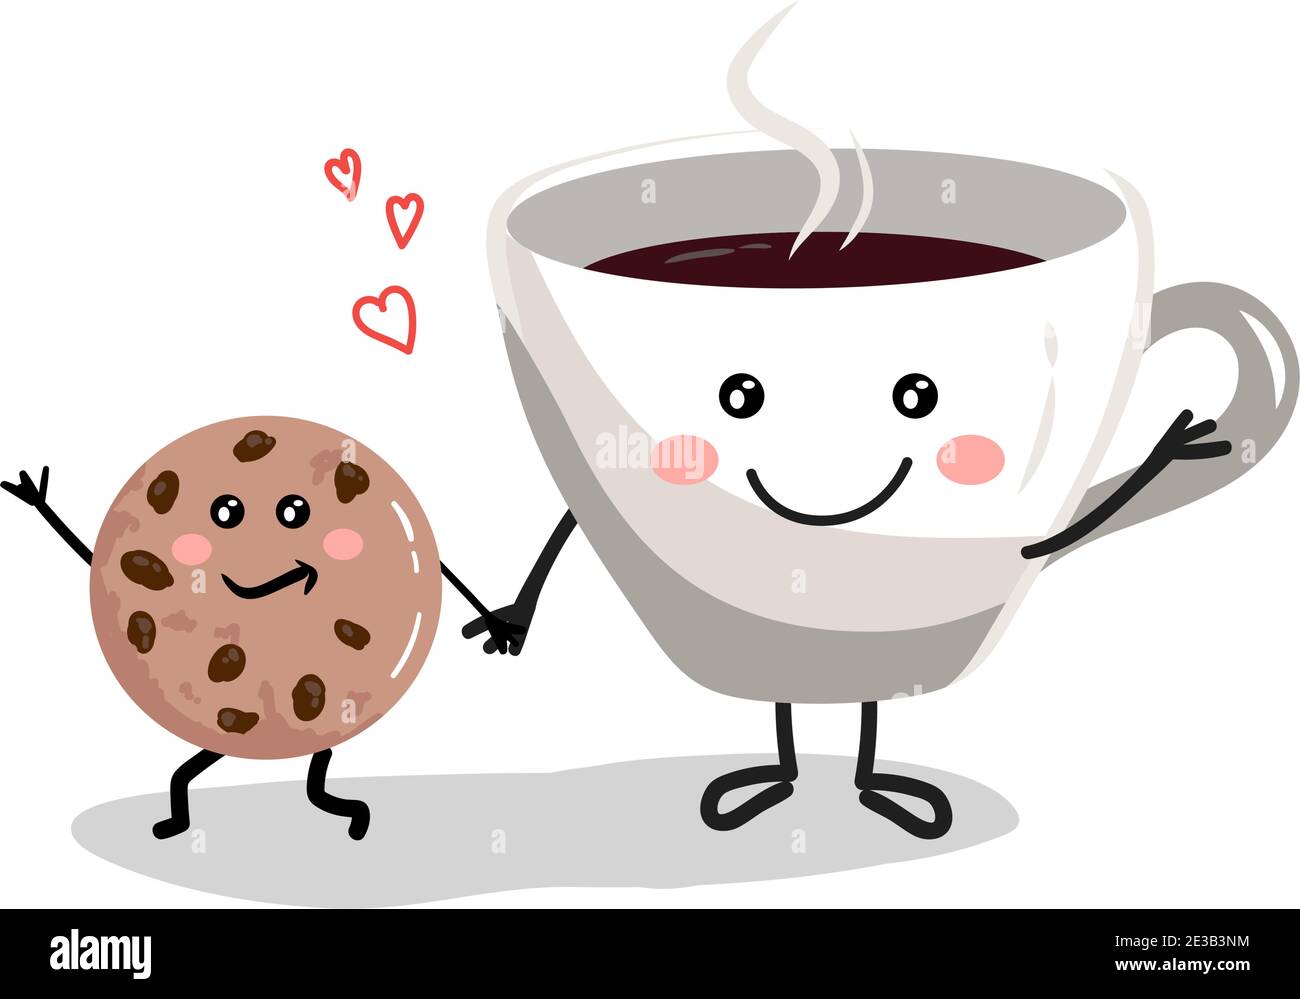 Tasse Kaffee mit Cookies Comic-Figuren Stock-Vektorgrafik - Alamy